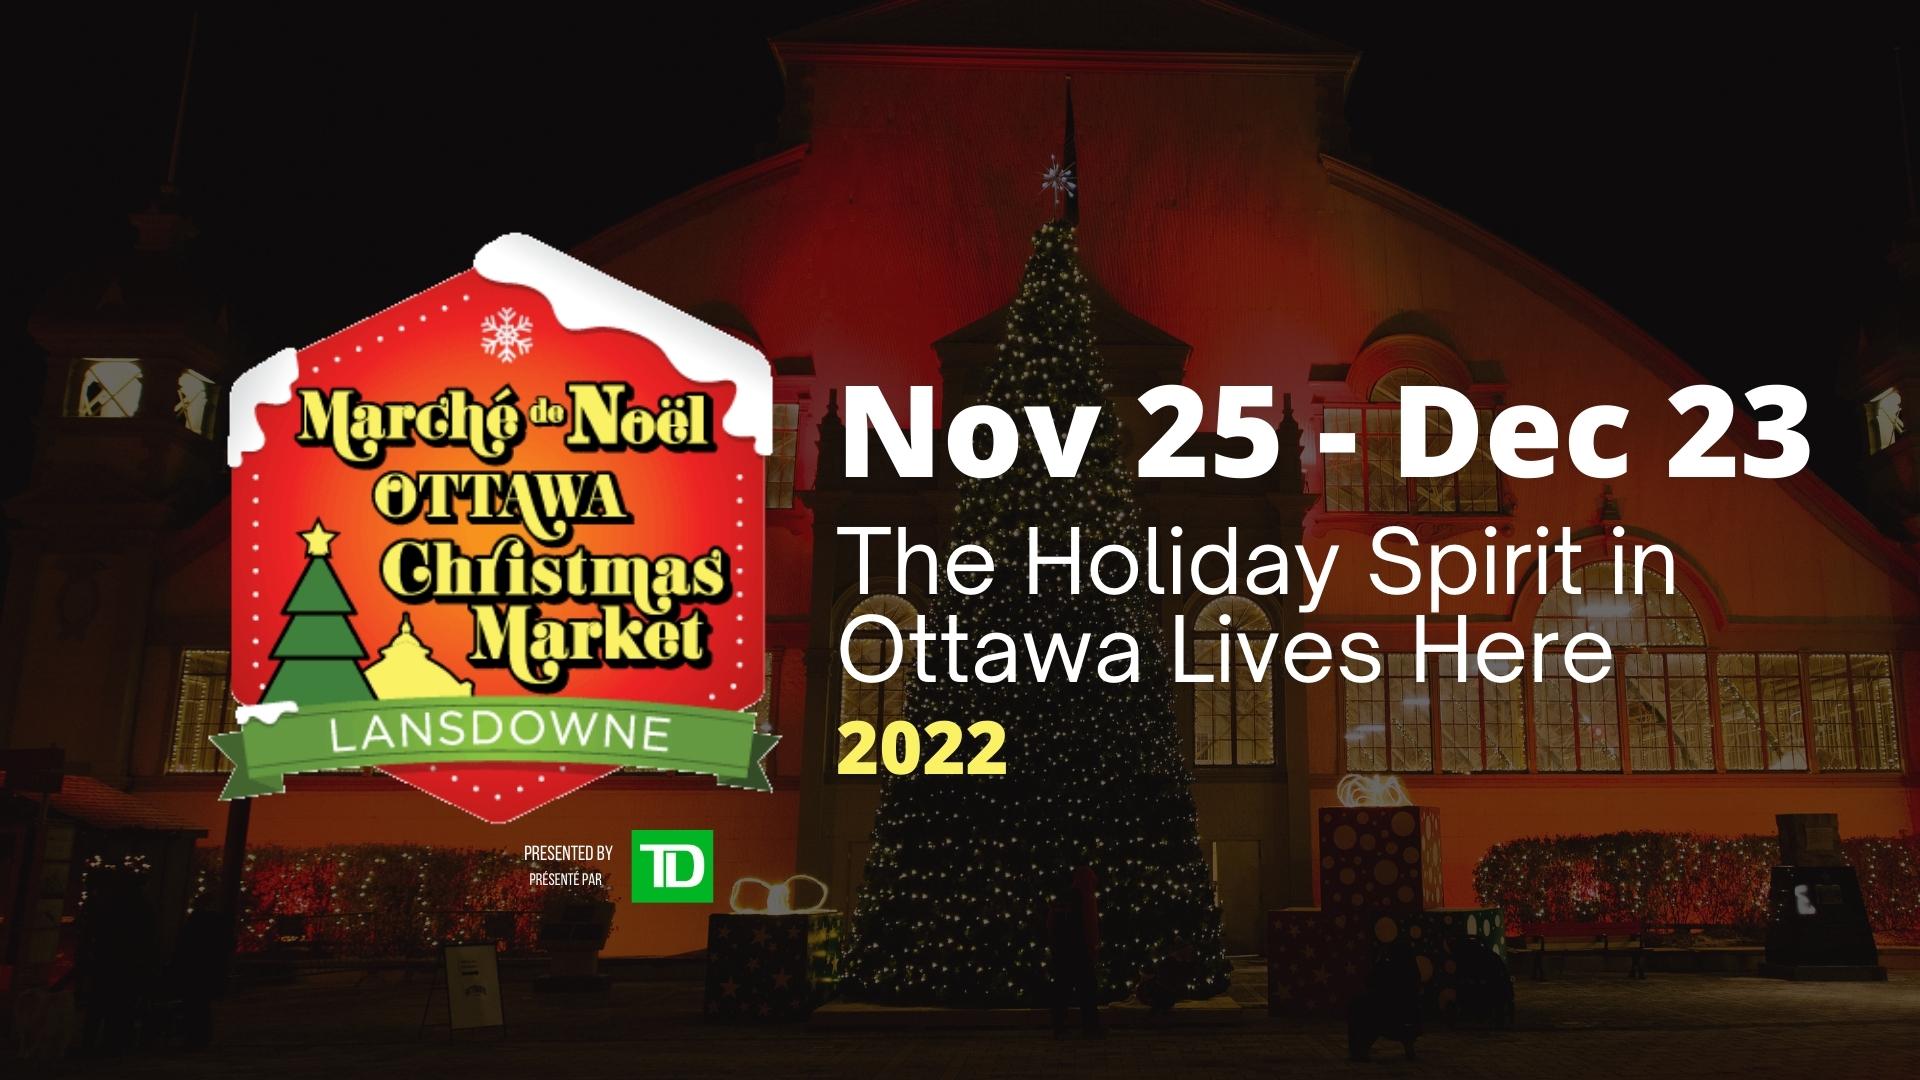 Ottawa Christmas Market from November 25 to Dec 23 2022